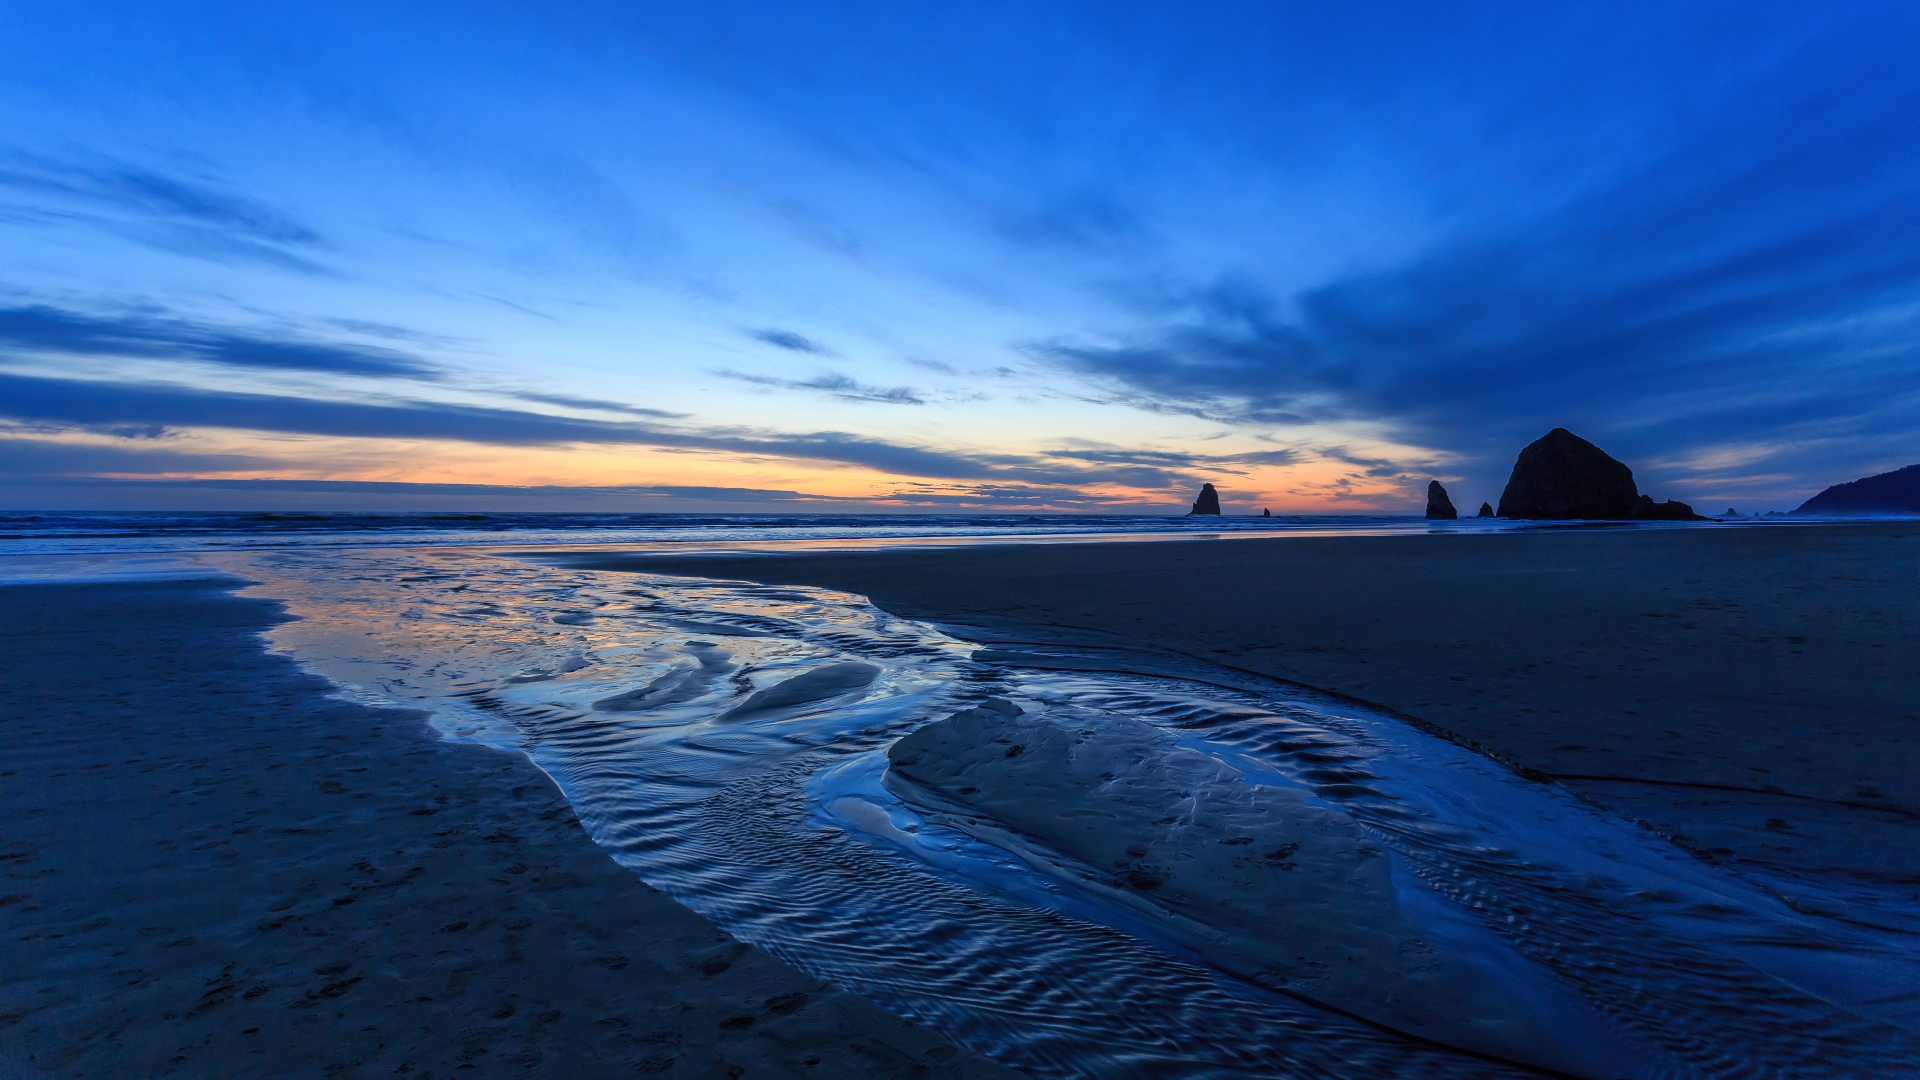 Sunset Oregon Beach for 1920 x 1080 HDTV 1080p resolution